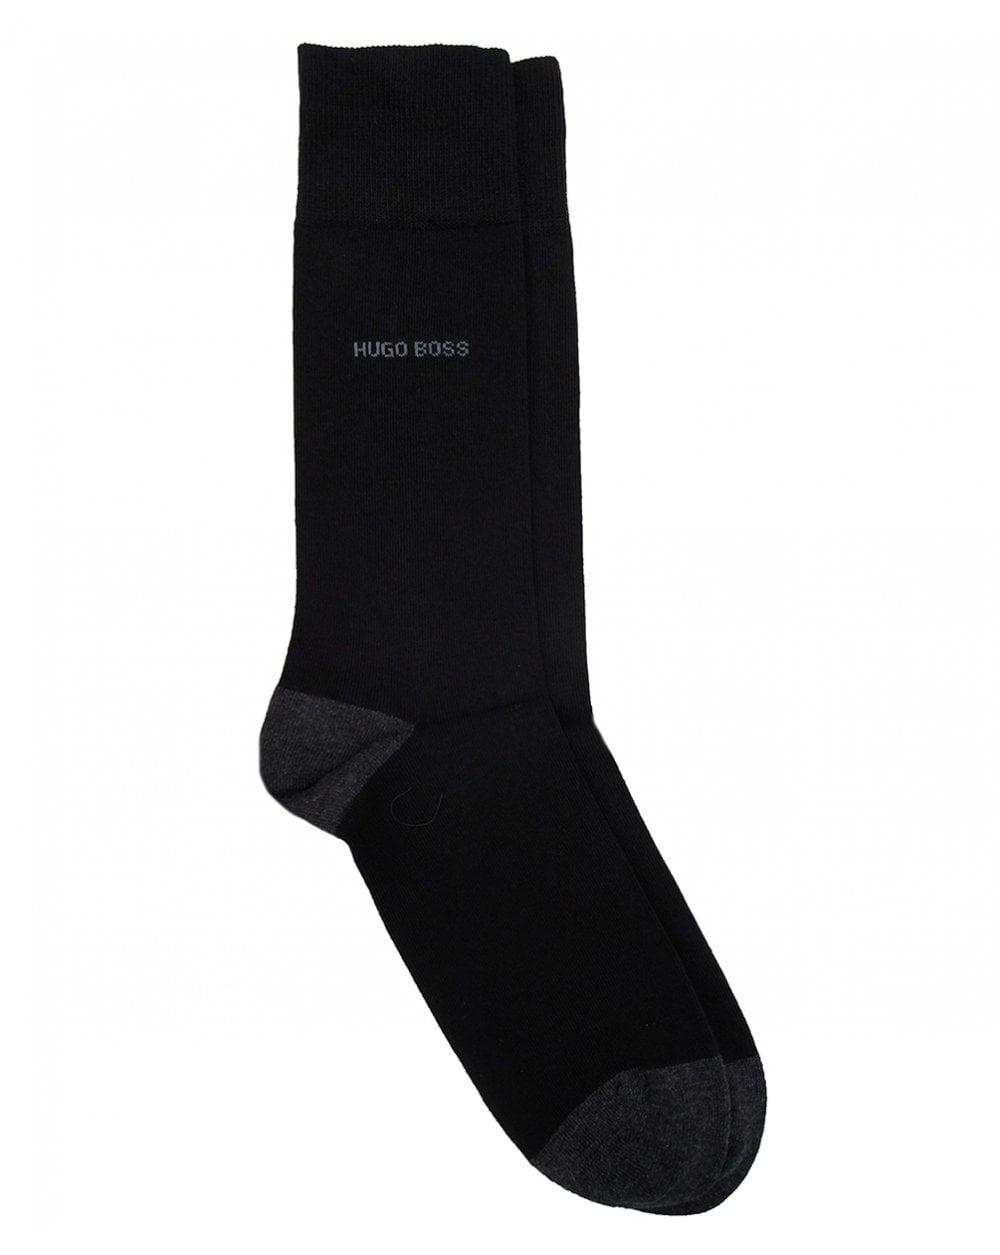 Lyst - BOSS by Hugo Boss Heel And Toe Two Pack Of Socks in Black for Men